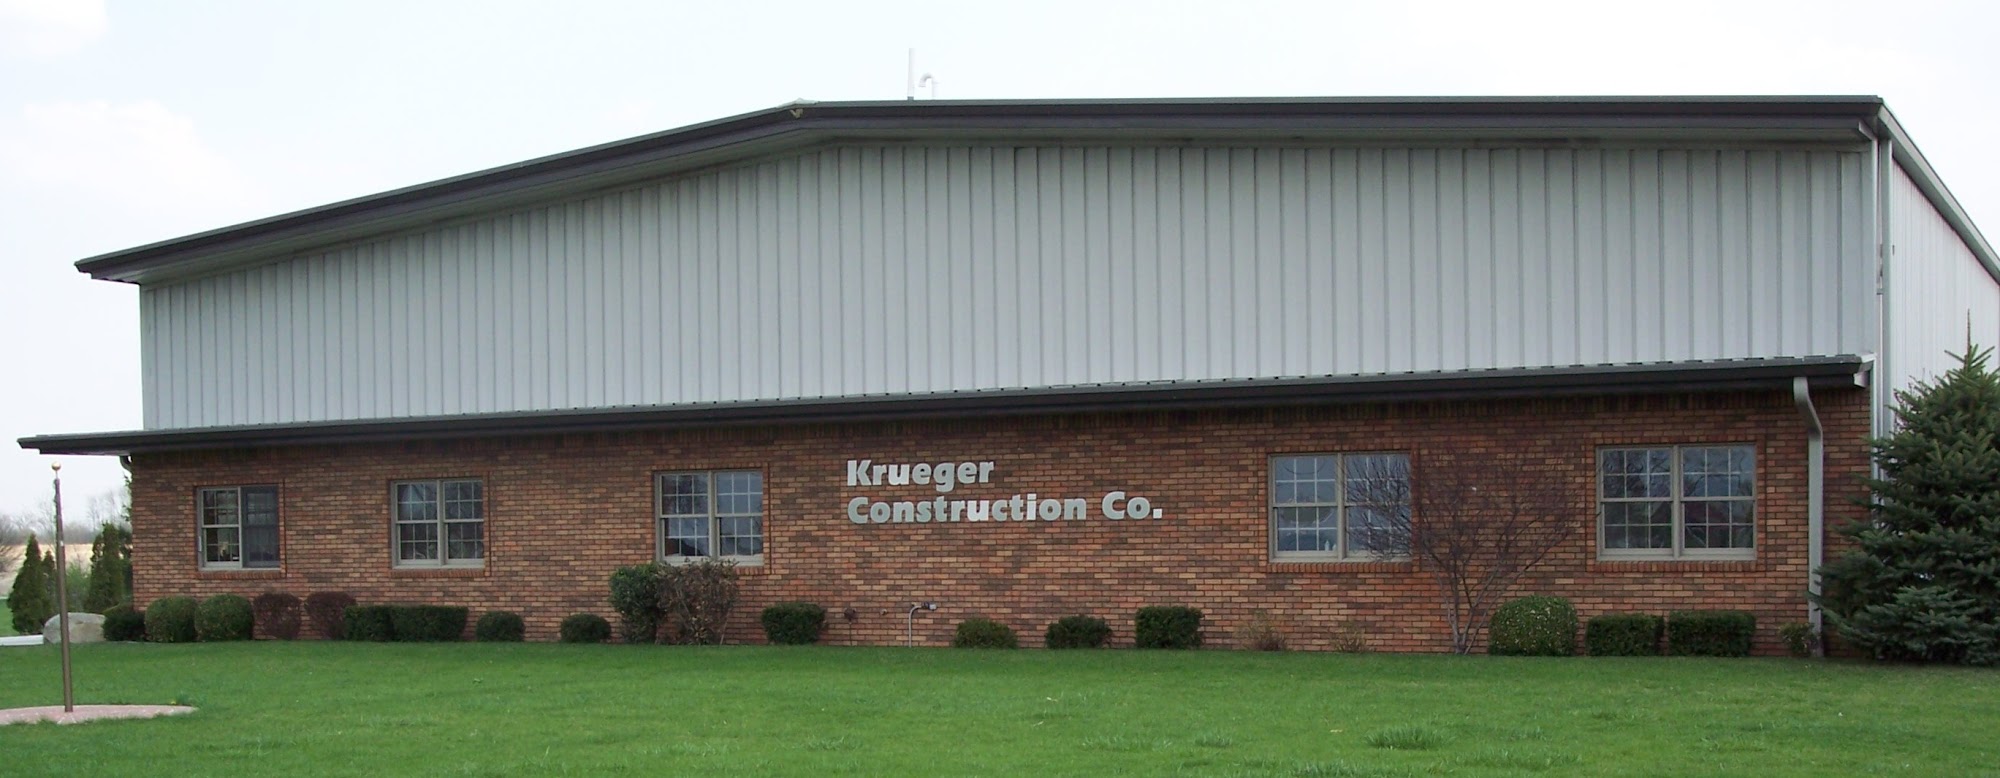 Krueger Construction Co. 9804, 21105 Co Rd C, Archbold Ohio 43502